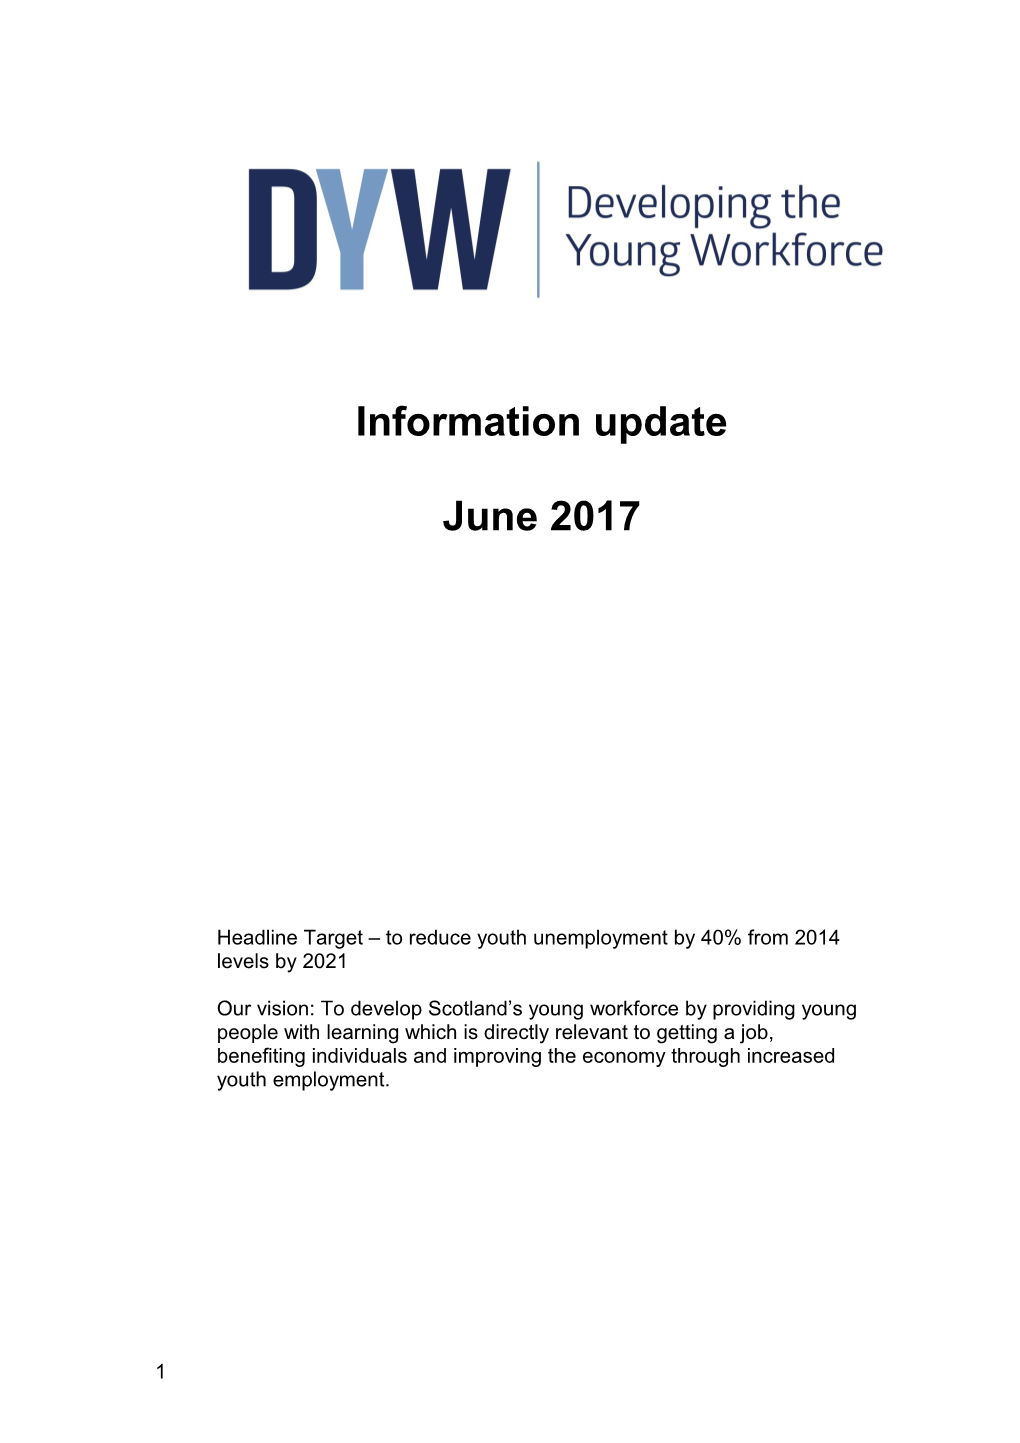 Word File: DYW Information Update - June 2017